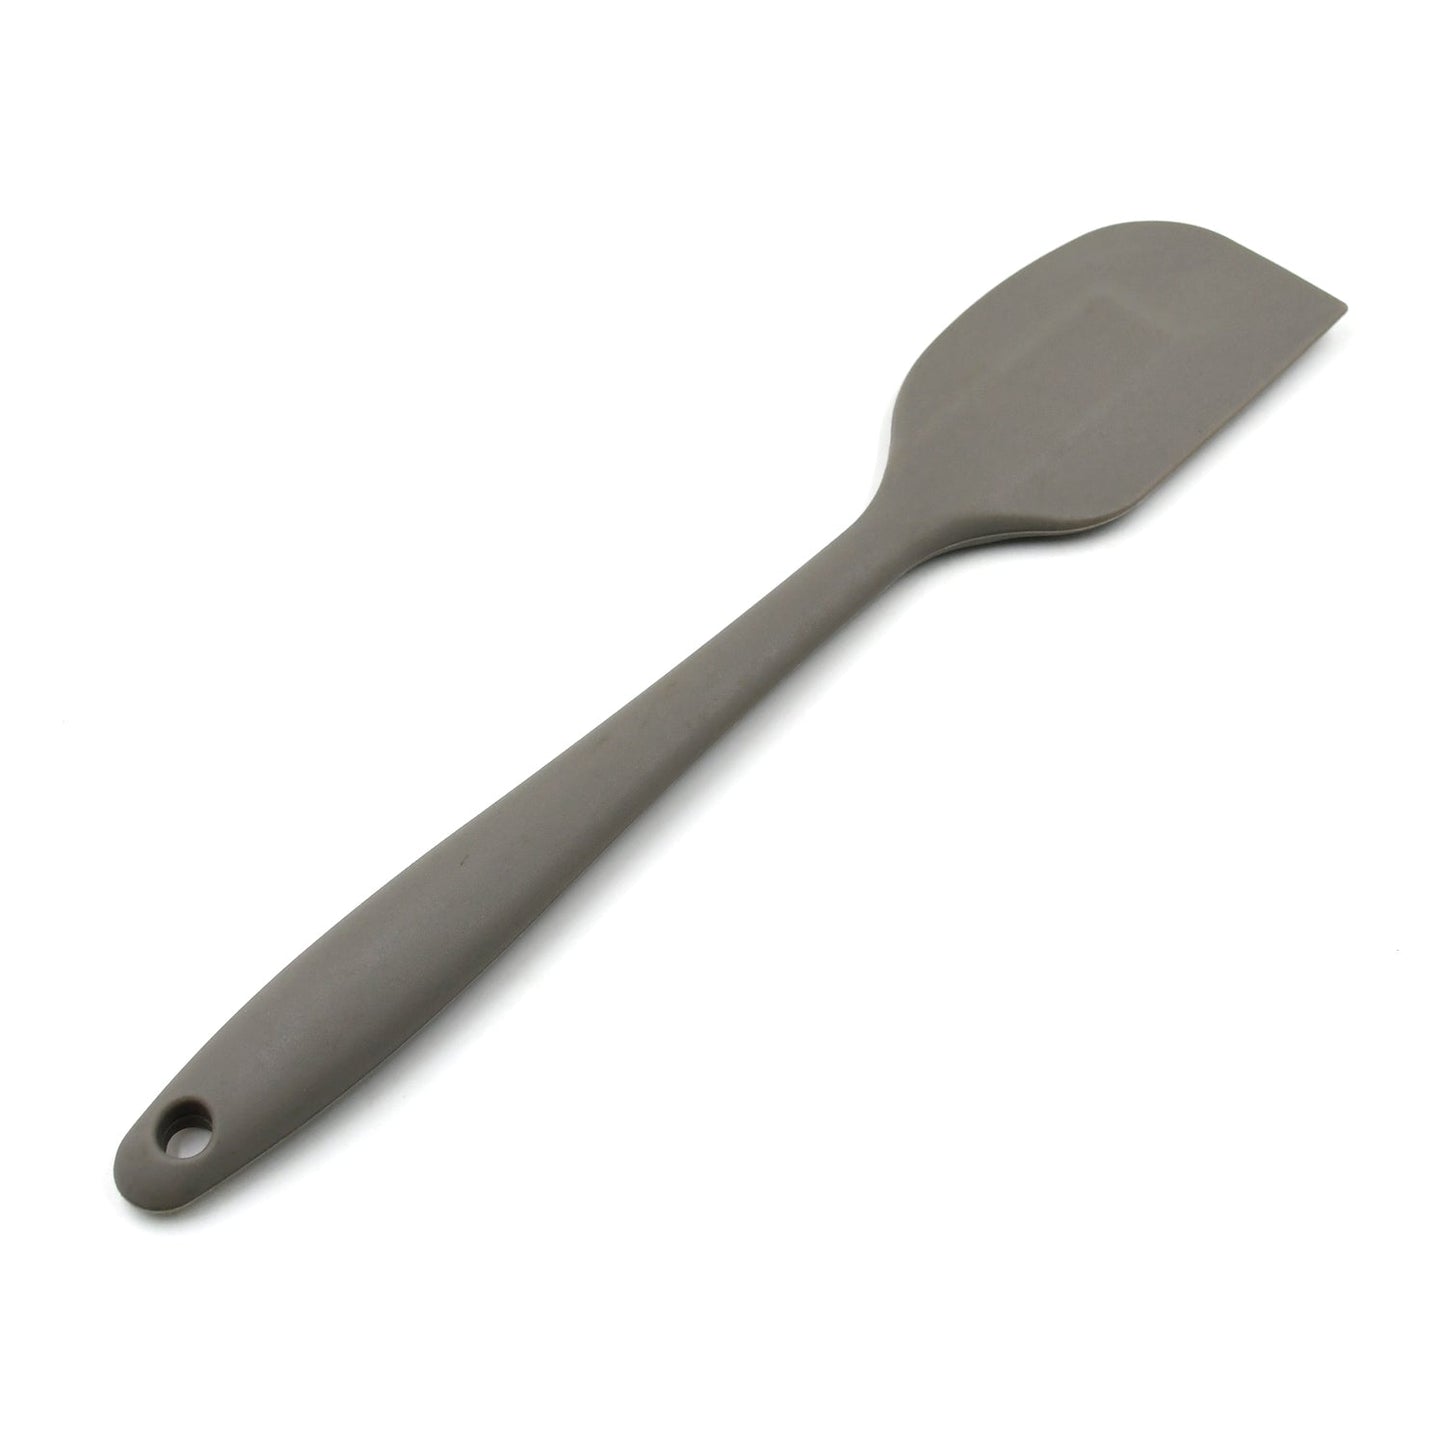 5455 Silicone Spatula - Rubber Spatula - 600Â°F Heat Resistant Baking Spoon & Spatulas (28cm)